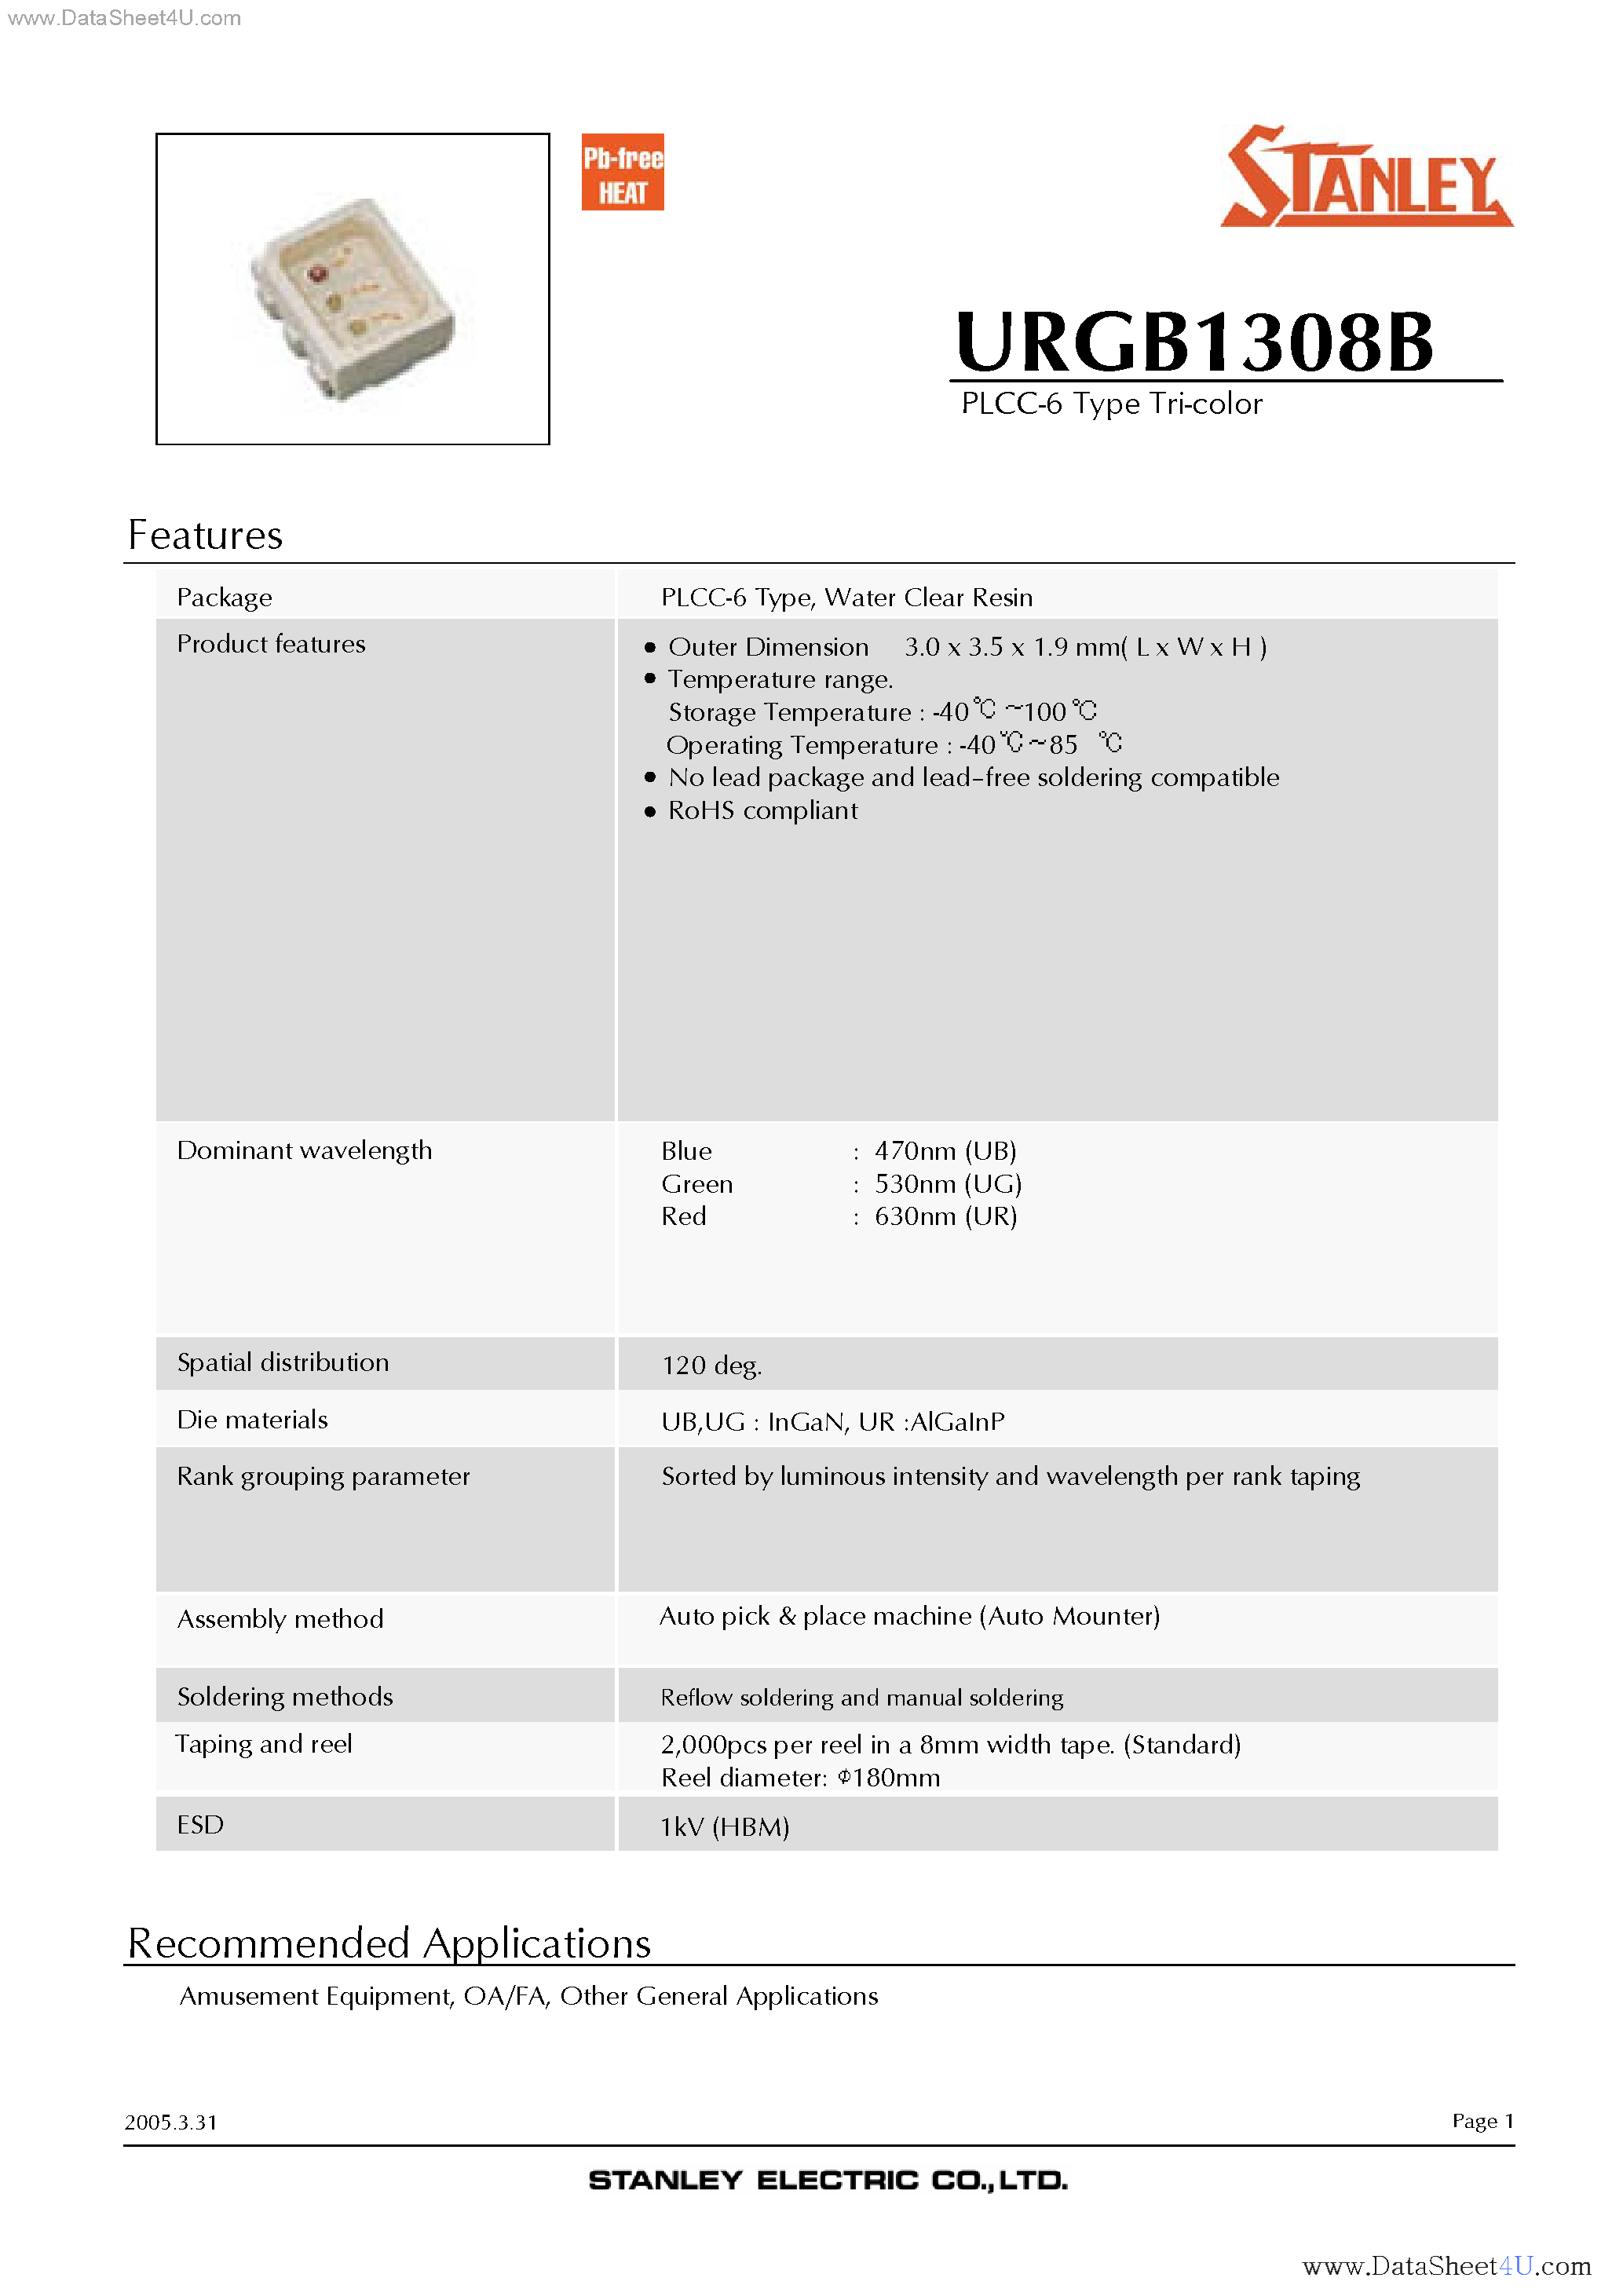 Datasheet URGB1308B - PLCC-6 Type Tri-Color page 1